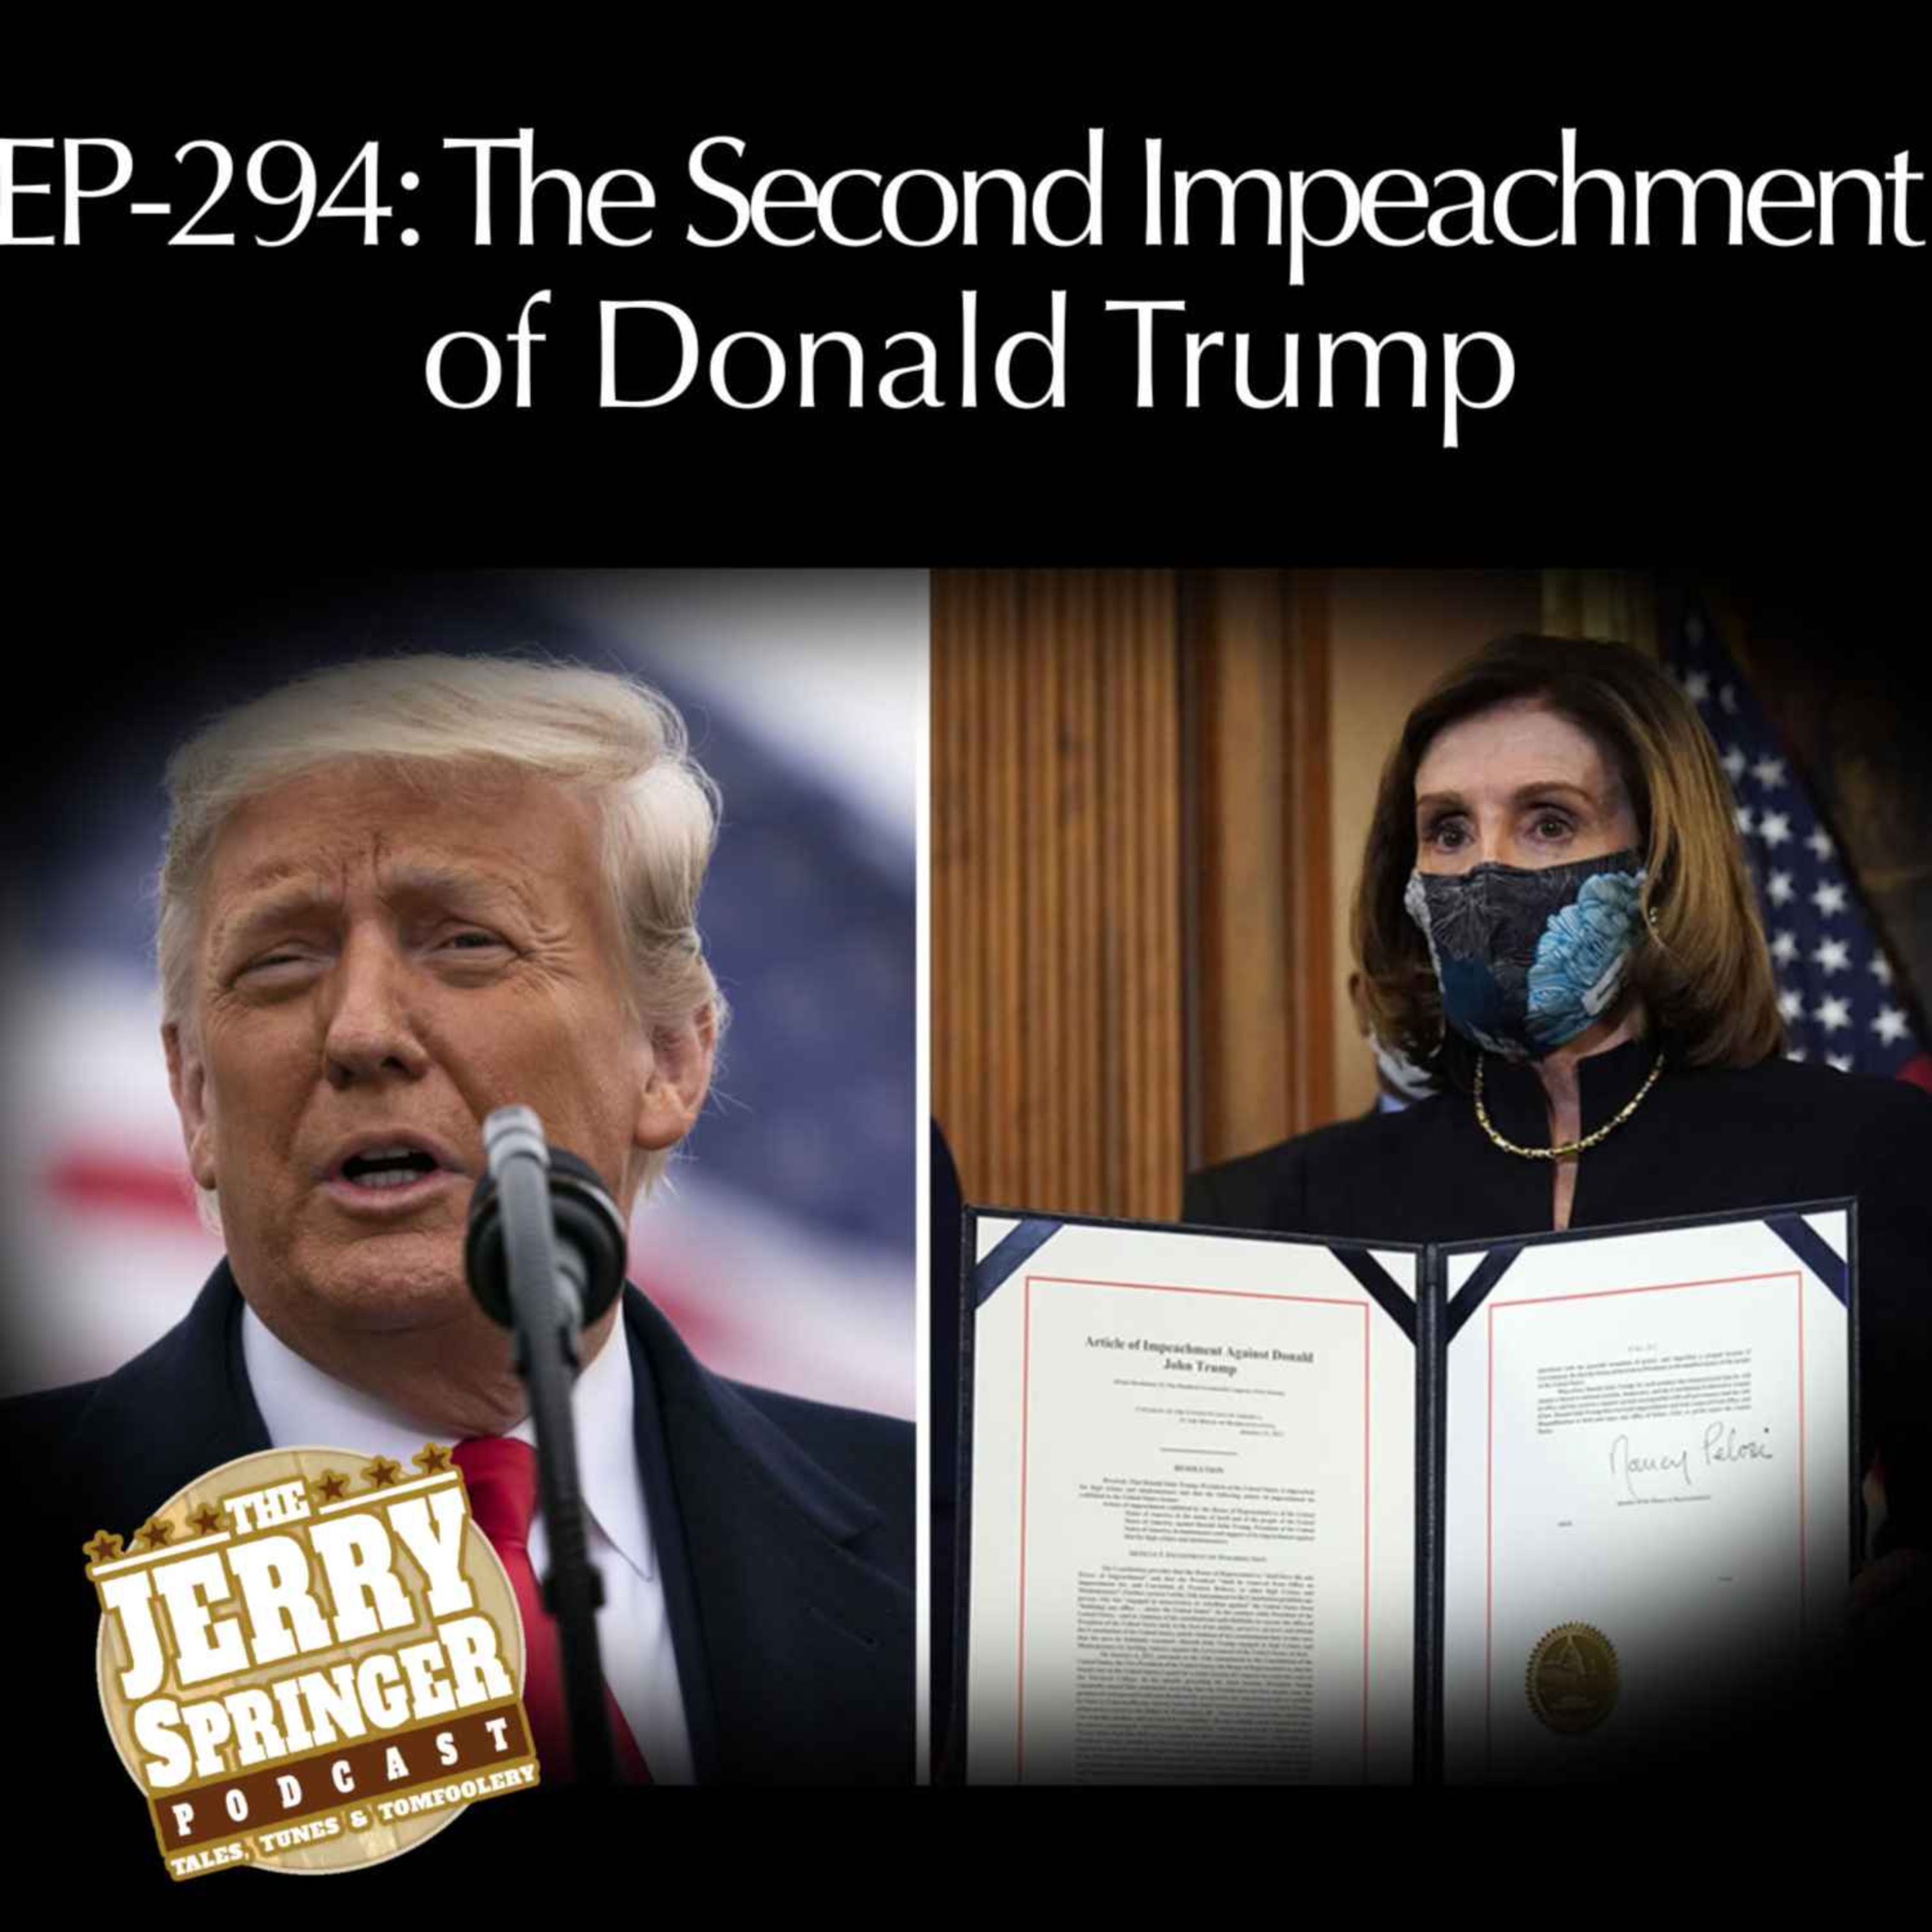 The Second Impeachment of Donald Trump:  EP-294